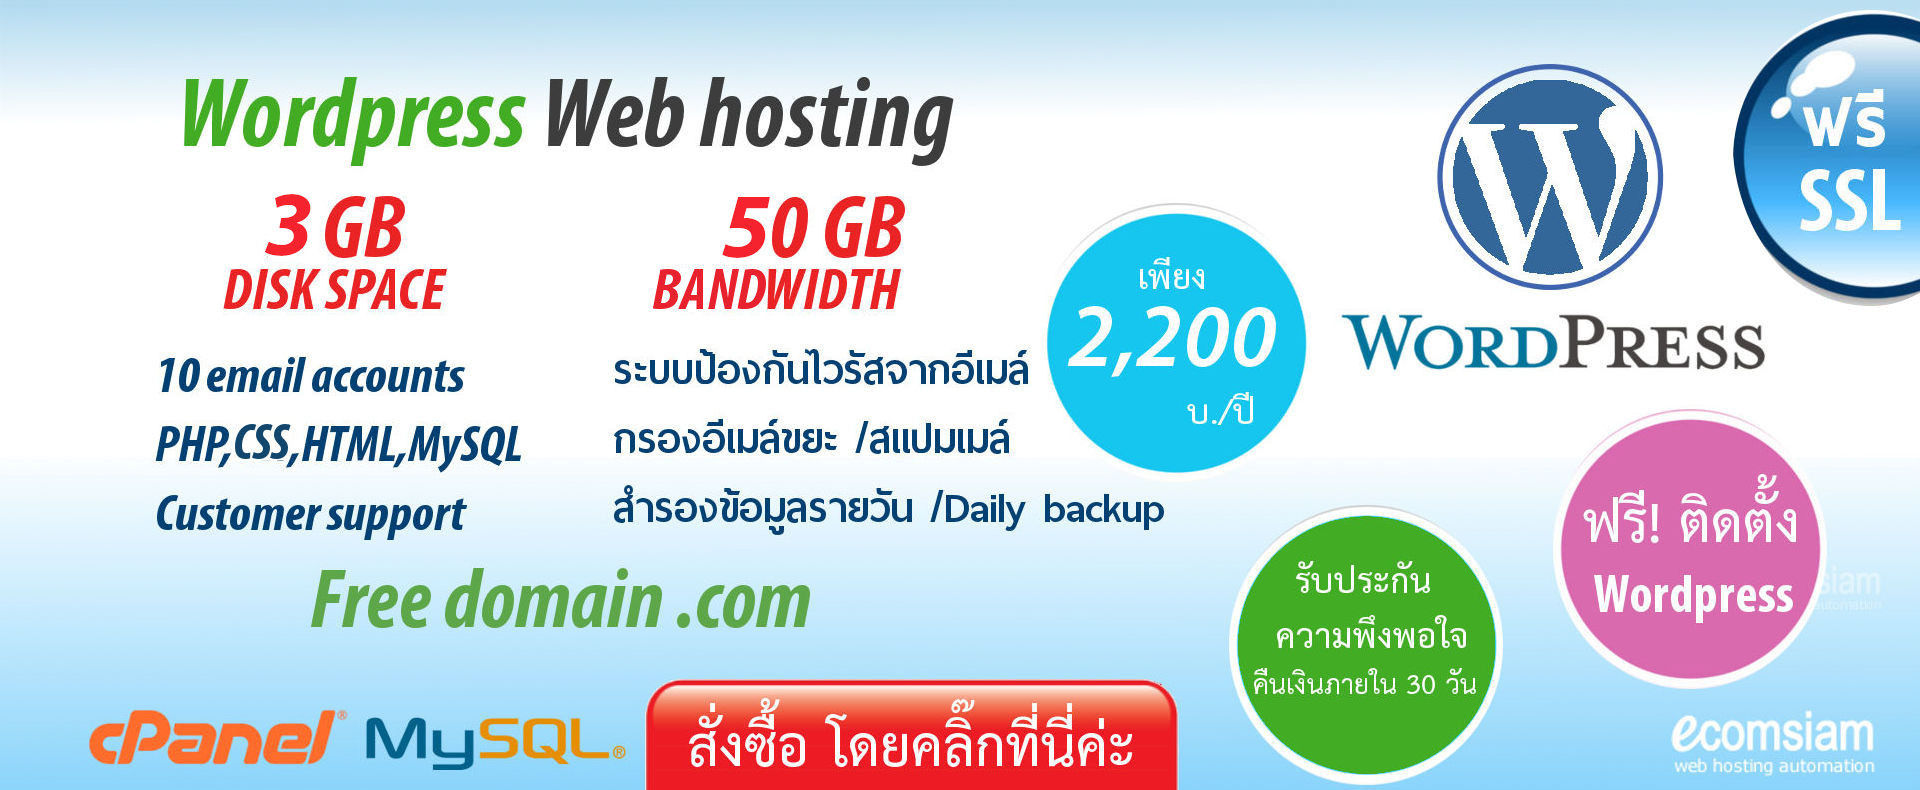 wordpress-web-hosting-thailand ฟรีโดเมน ฟรี SSL เว็บโฮสติ้งไทย ราคาเบาๆ เริ่มต้นเพียง 2200 บาทต่อปี บริการลูกค้า ดูแลดีโดย webhostthai.com